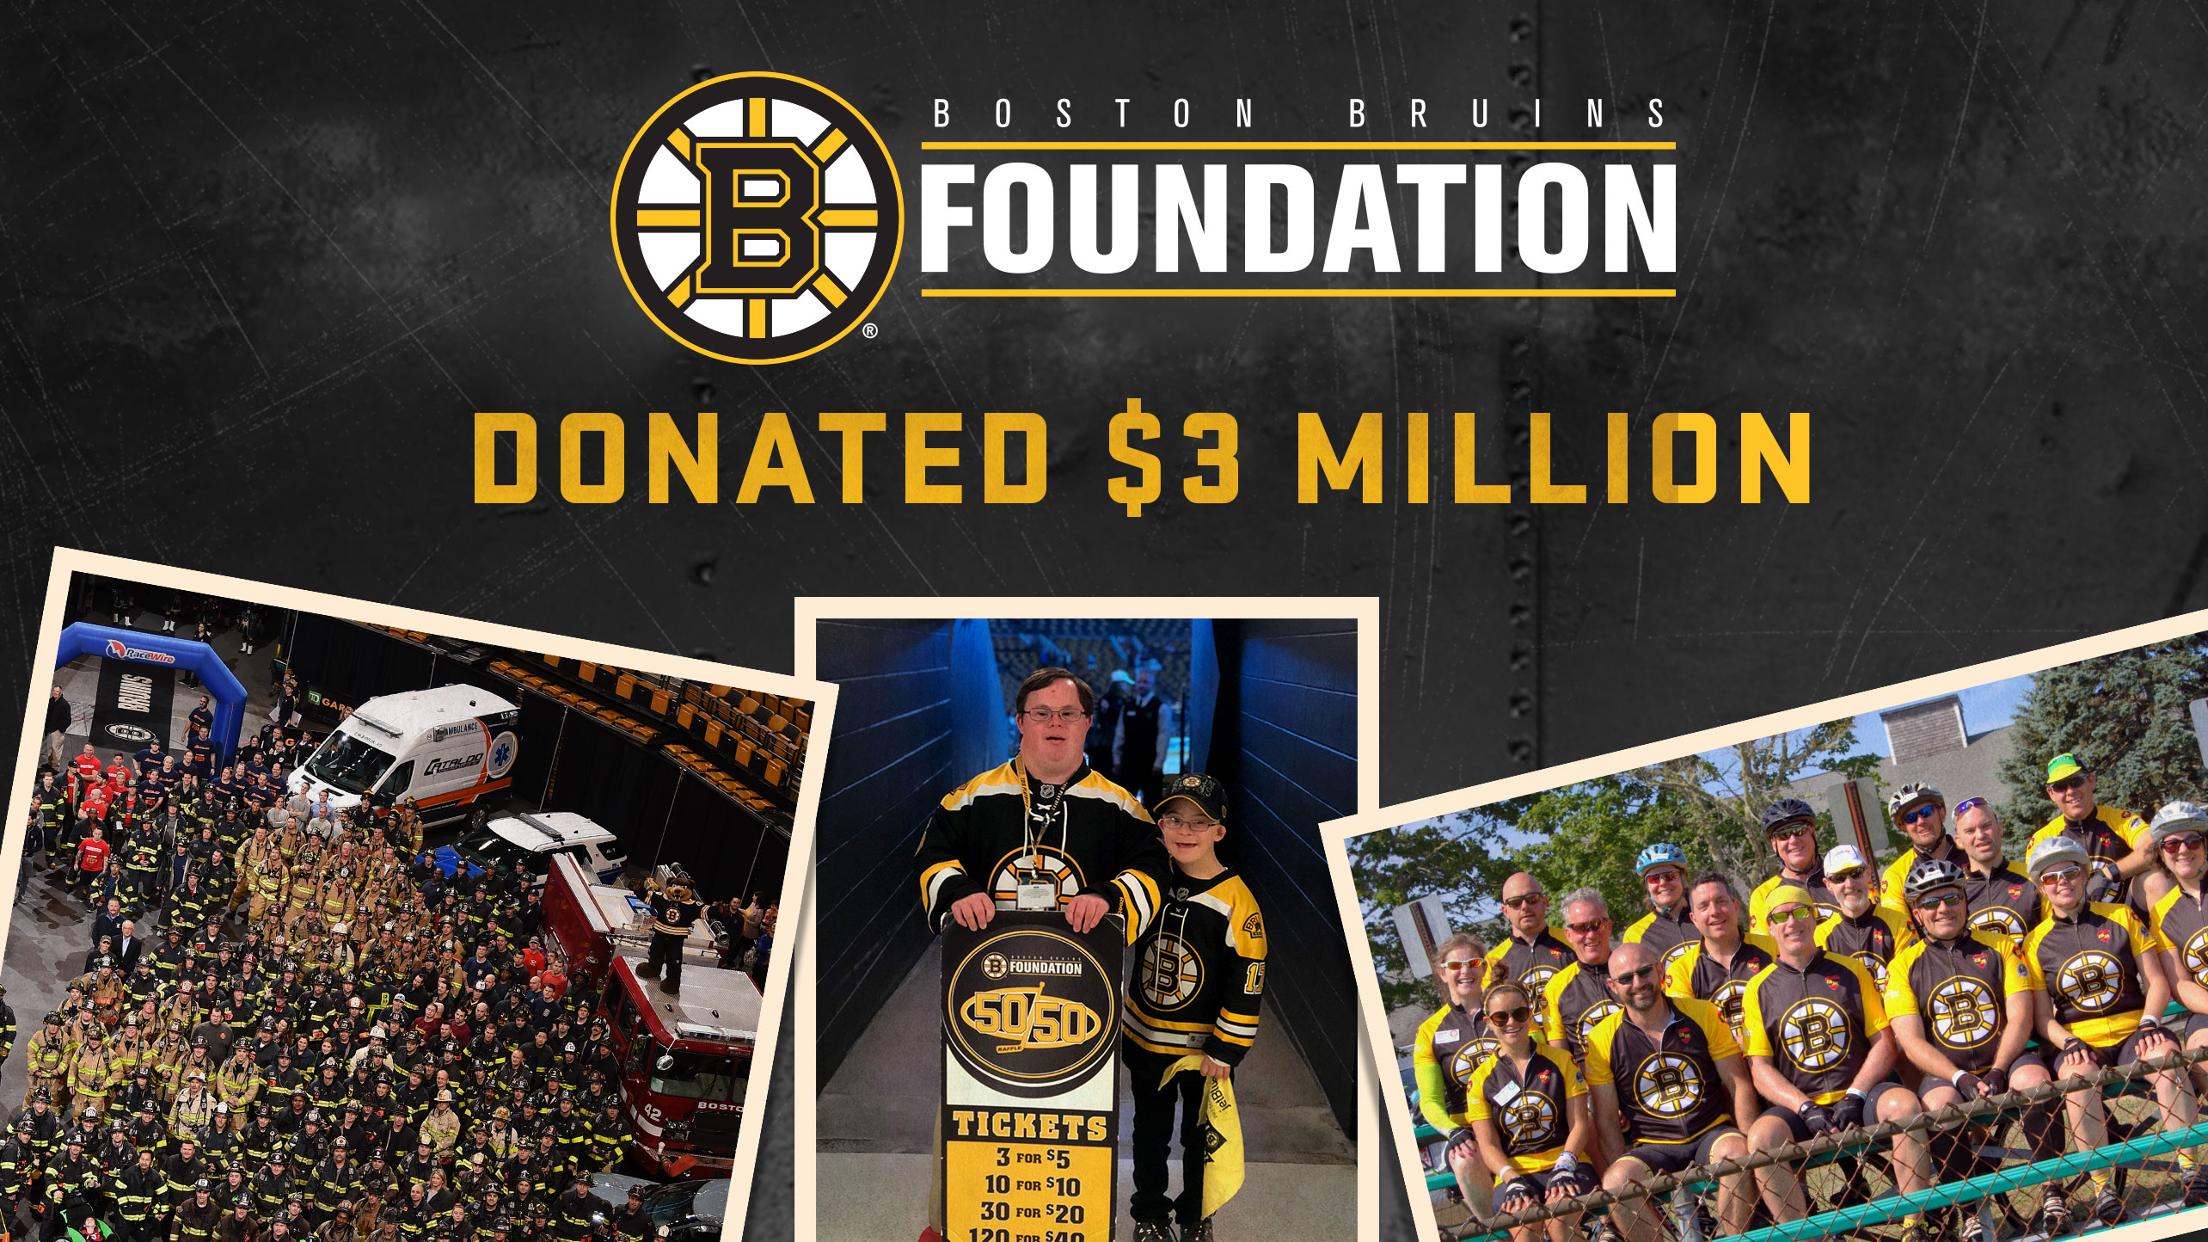 Bruins Foundation.jpg